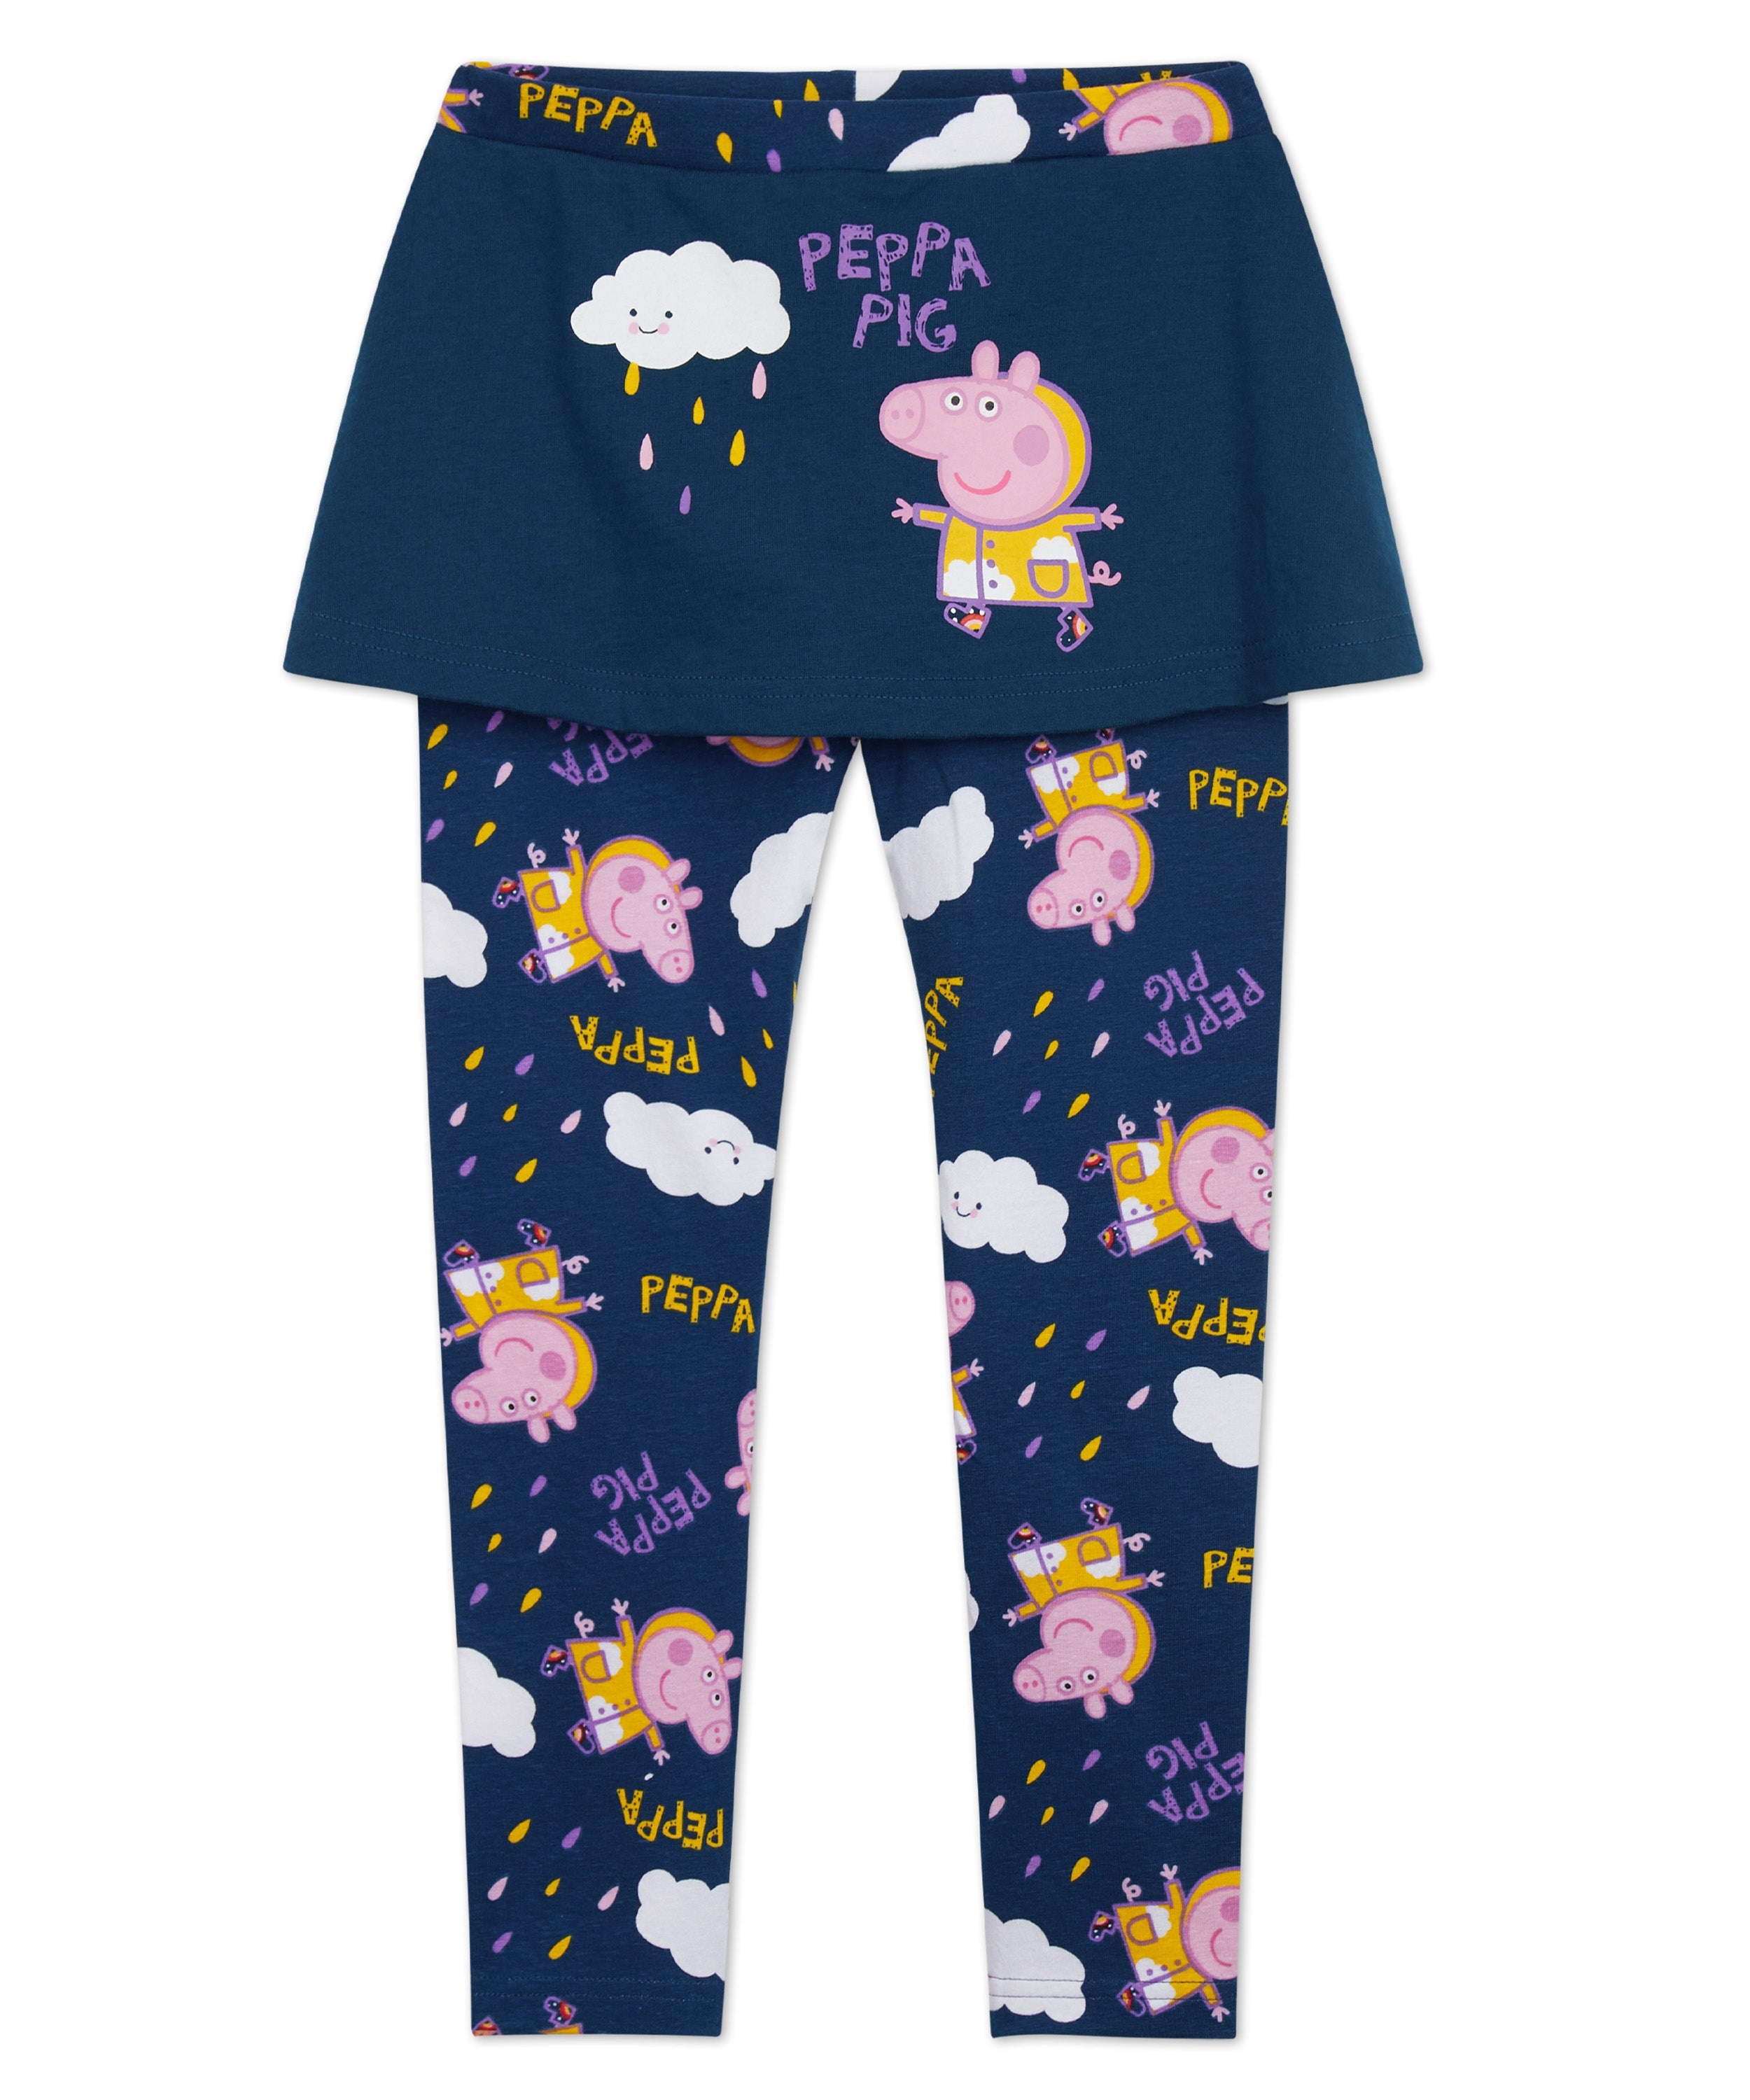 Peppa Pig Girls Knickers with Magical Unicorn Design Children Underwea